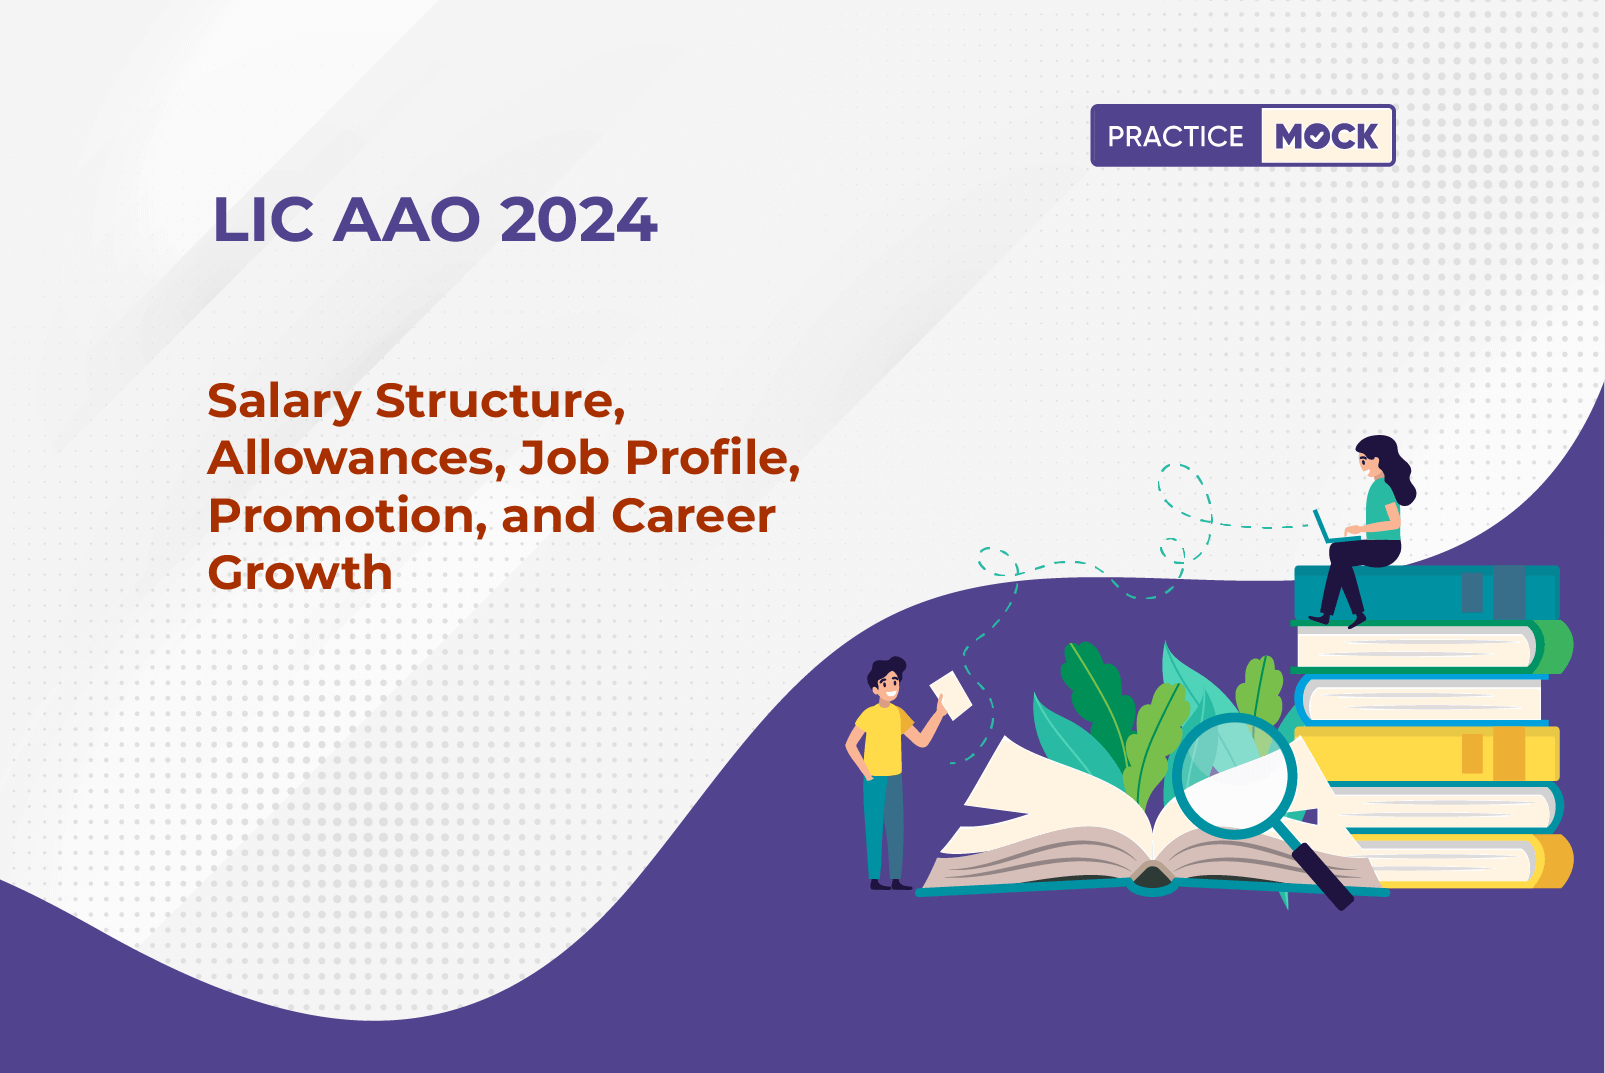 LIC AAO 2024 Salary Structure